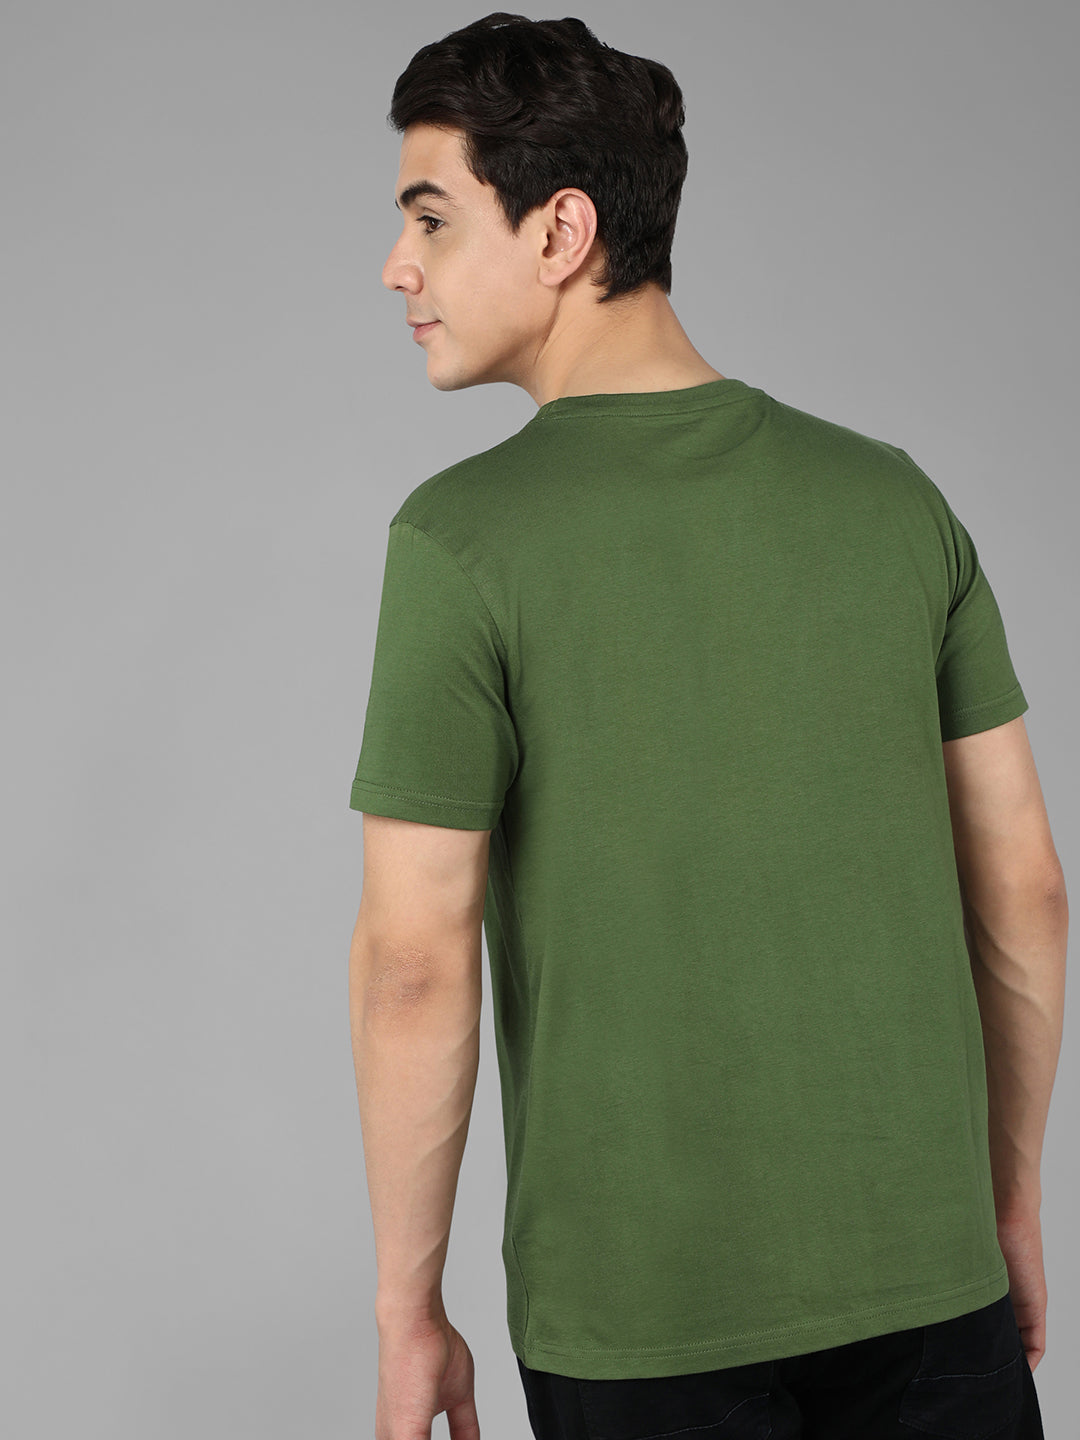 Harley Rider - Printed Men's Tshirt - Dry Olive Green